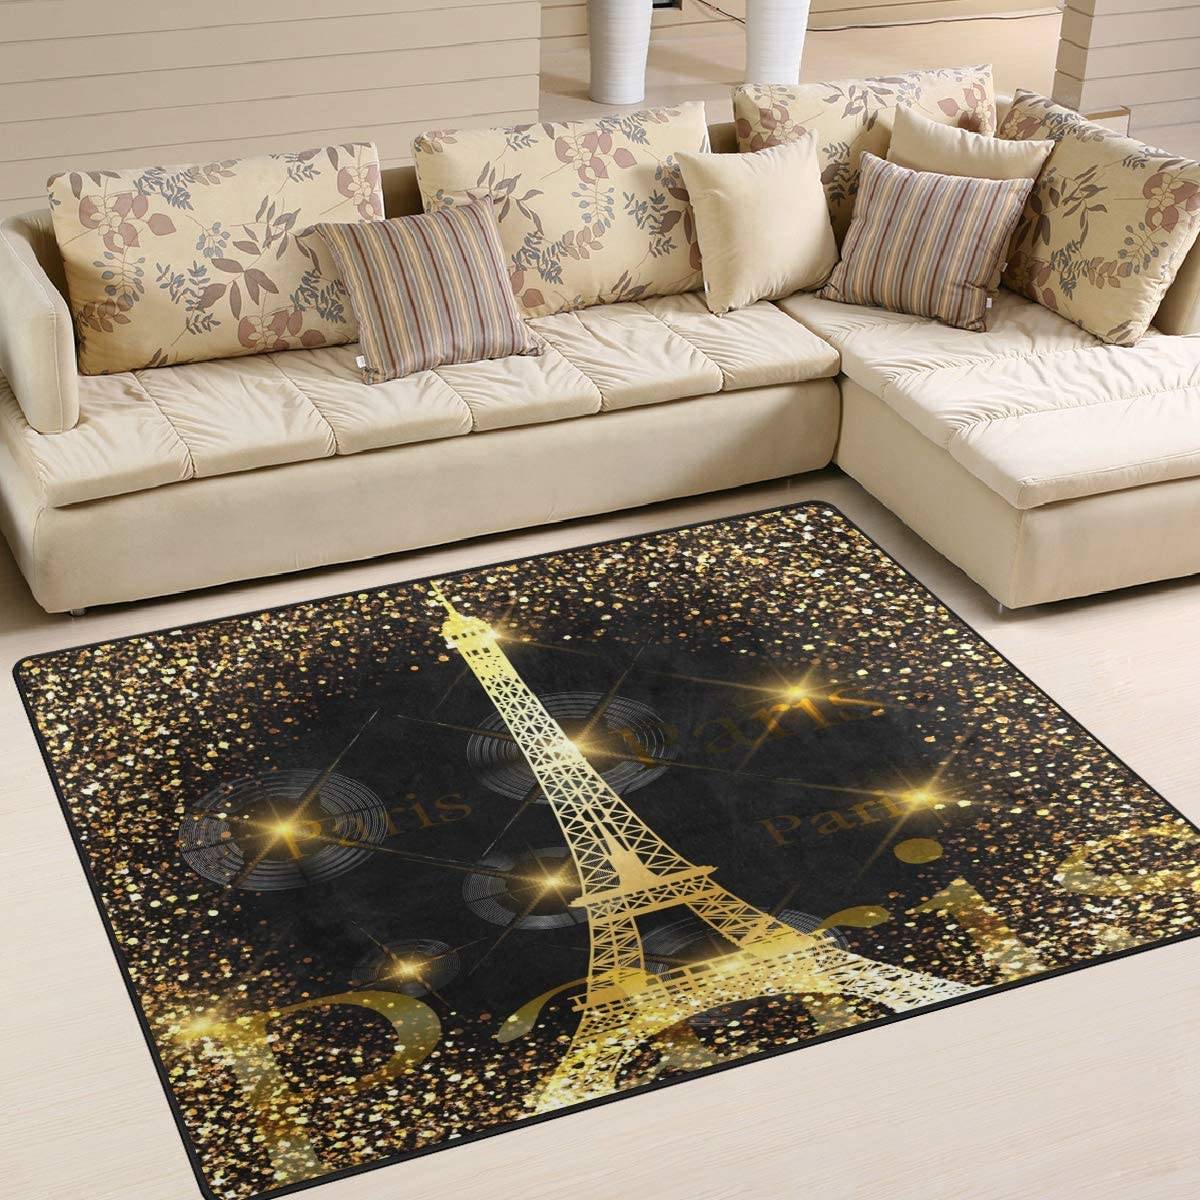 Paris Seine Eiffel Tower Soft Yoga Carpet Living Room Floor Mat Home Area Rug 